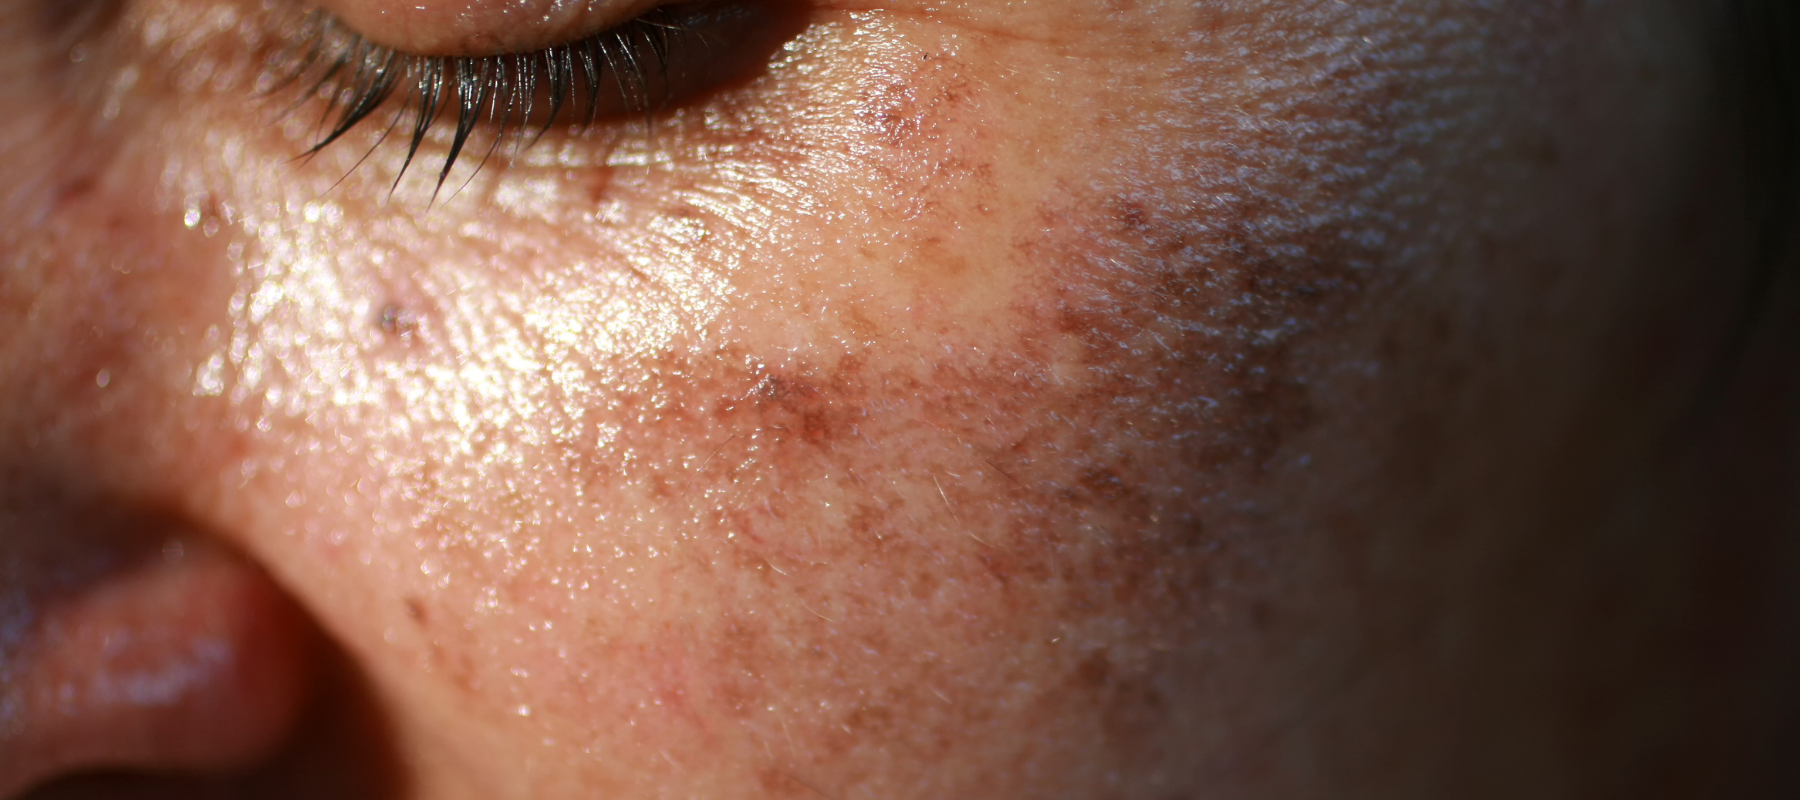 How to get rid of dark spots on black skin